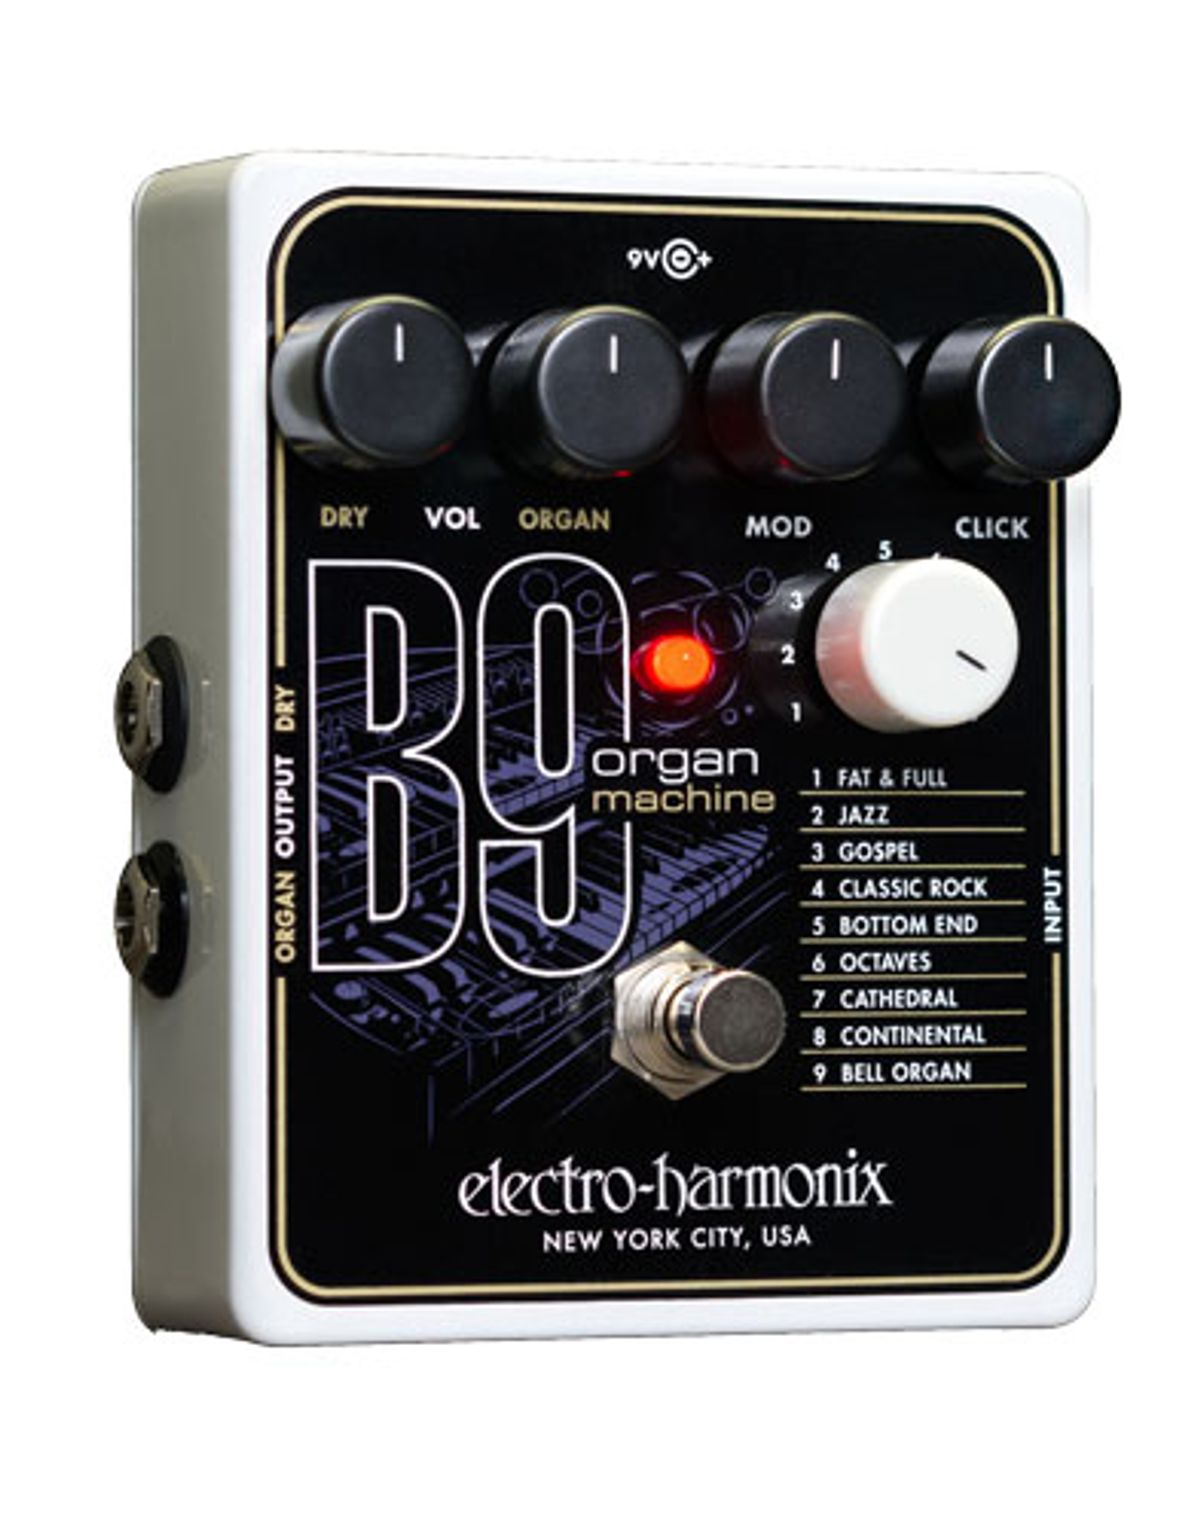 Electro-Harmonix Announces the B9 Organ Machine